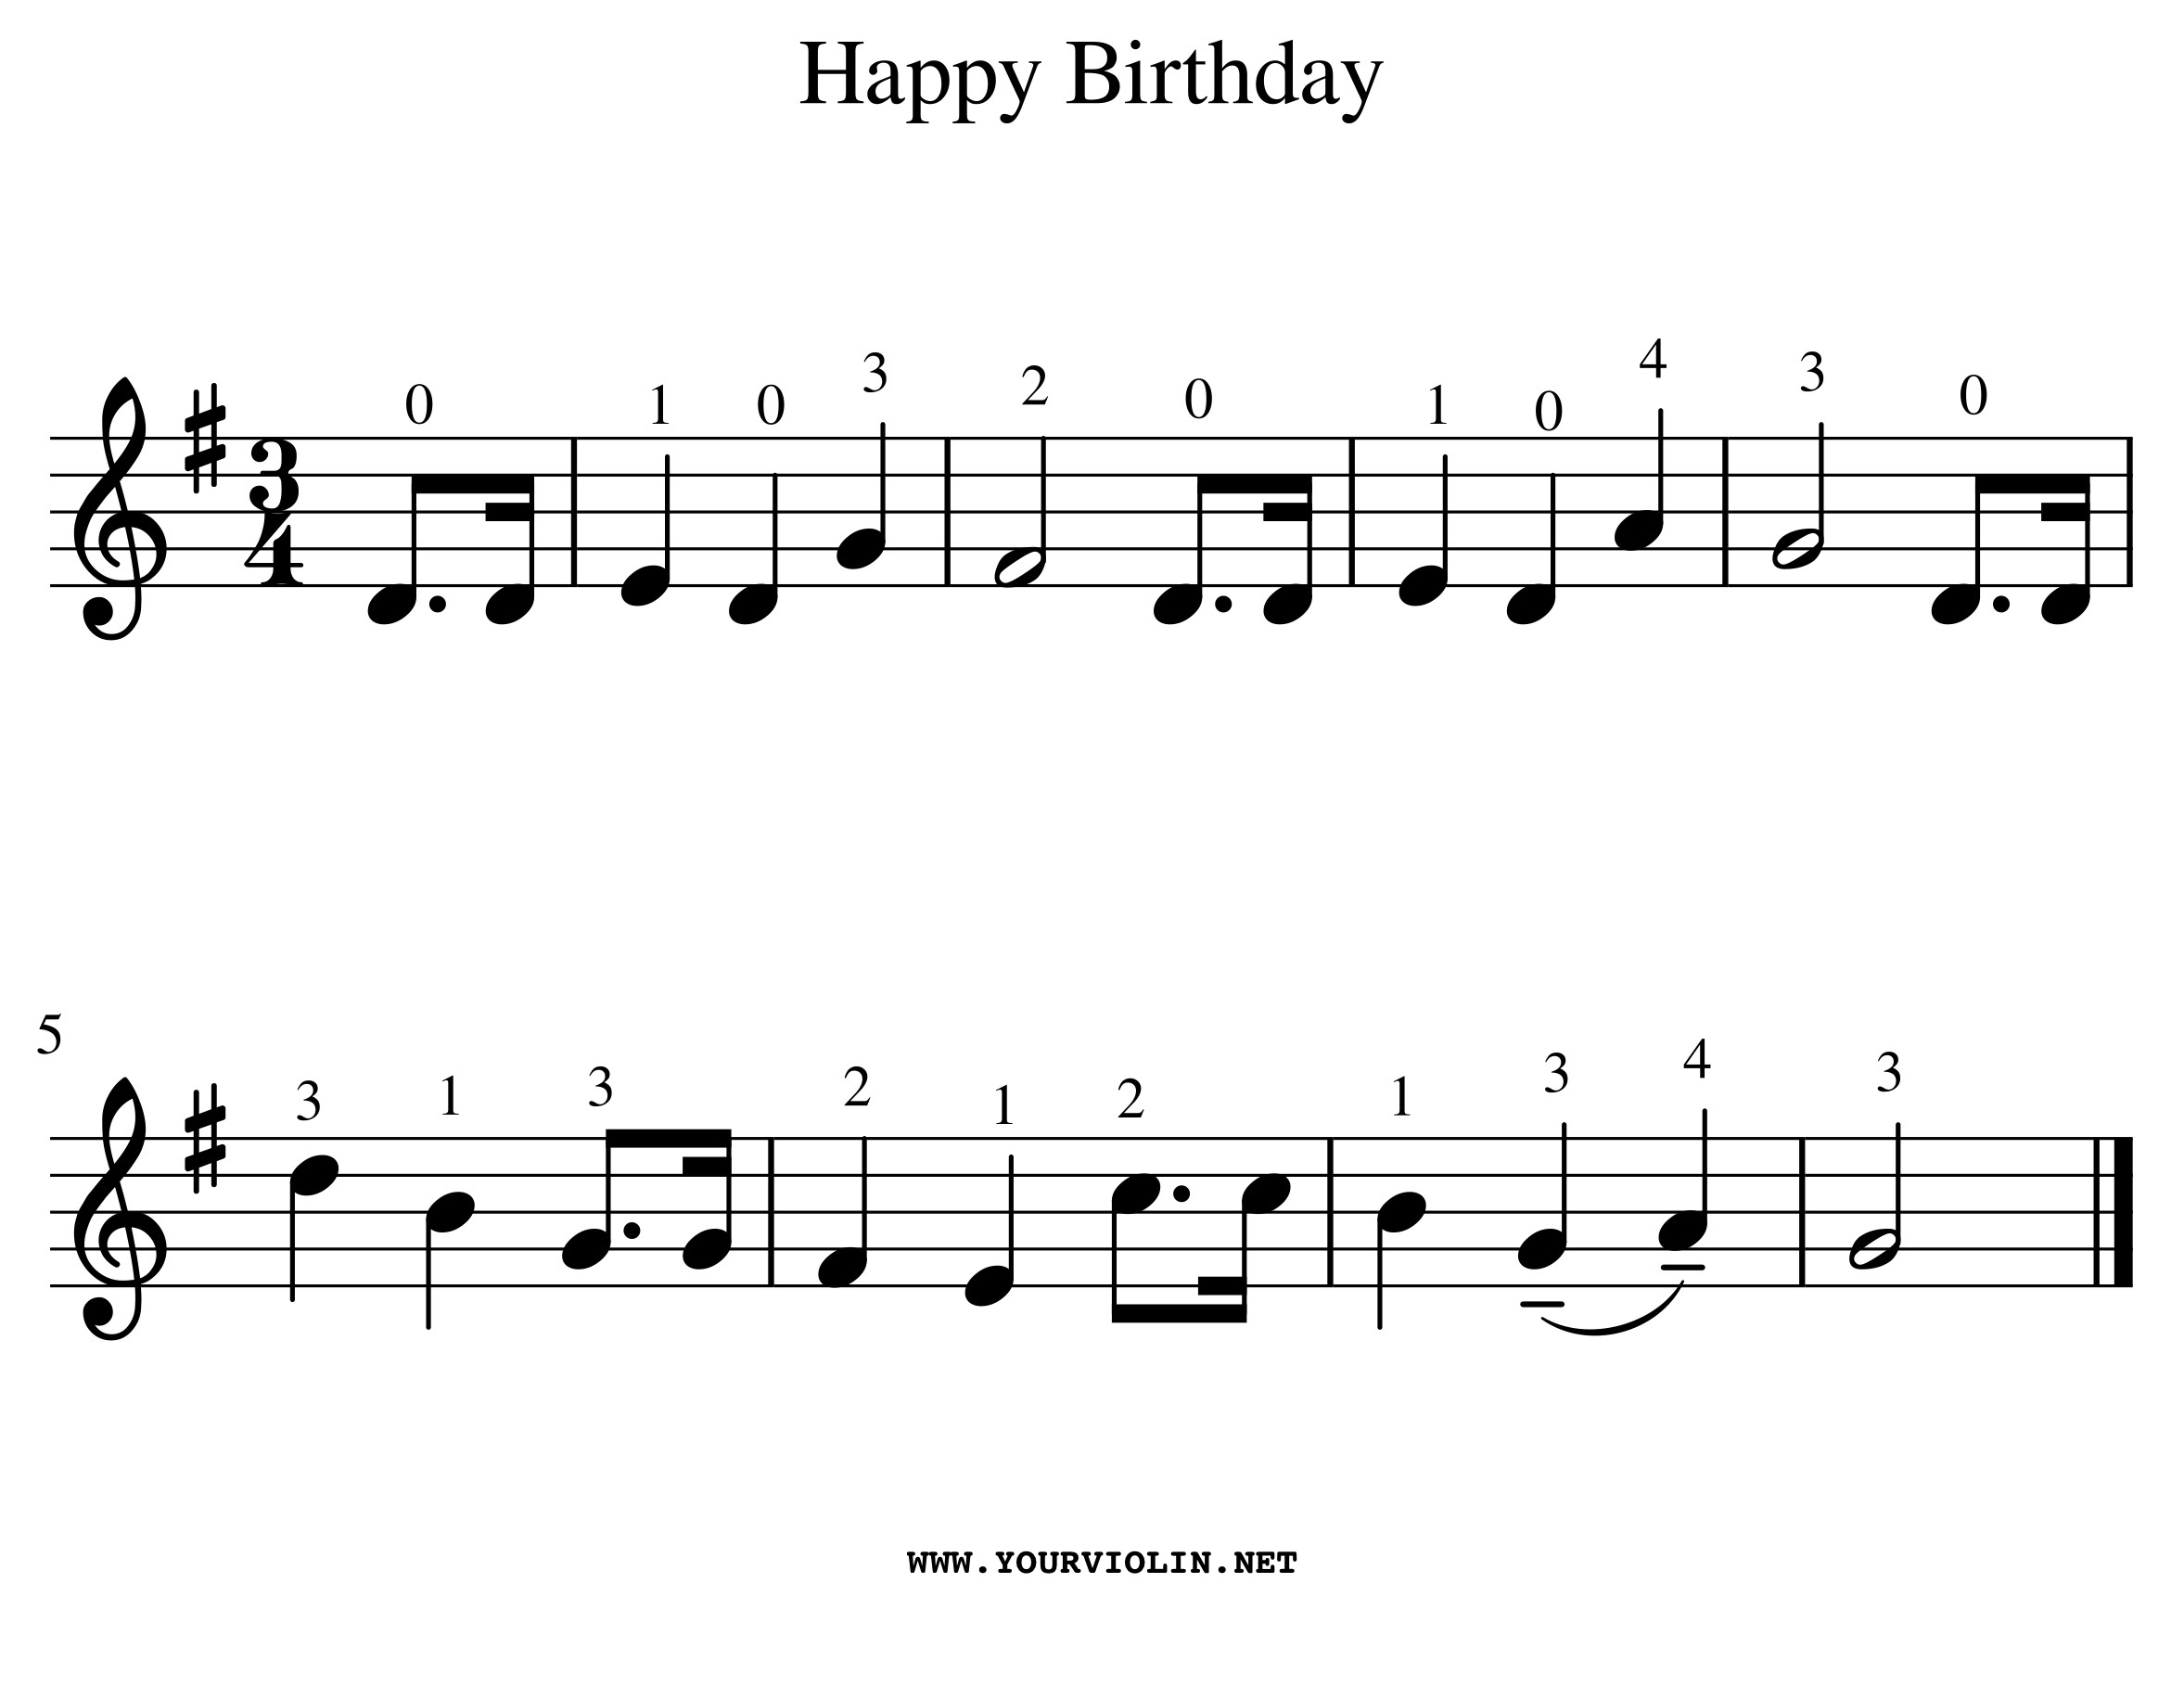 Happy Birthday Violin Sheet Music Easy : Free violin sheet music for ha...